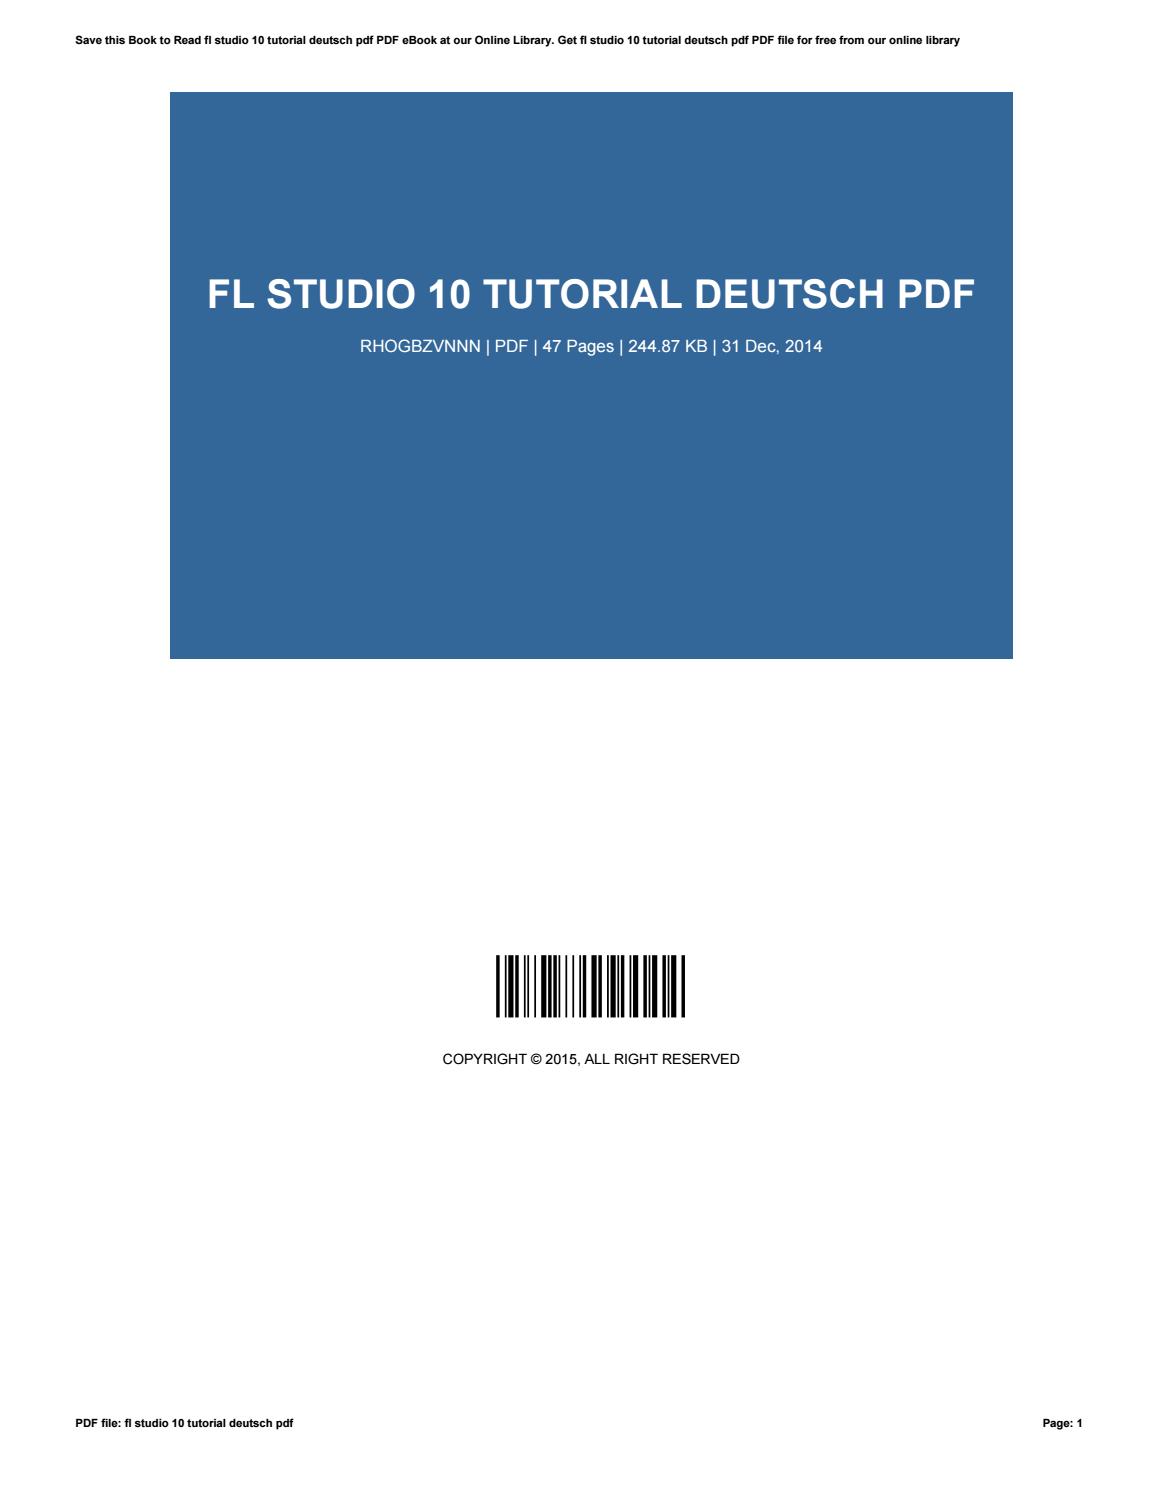 fl studio mp3 encoder